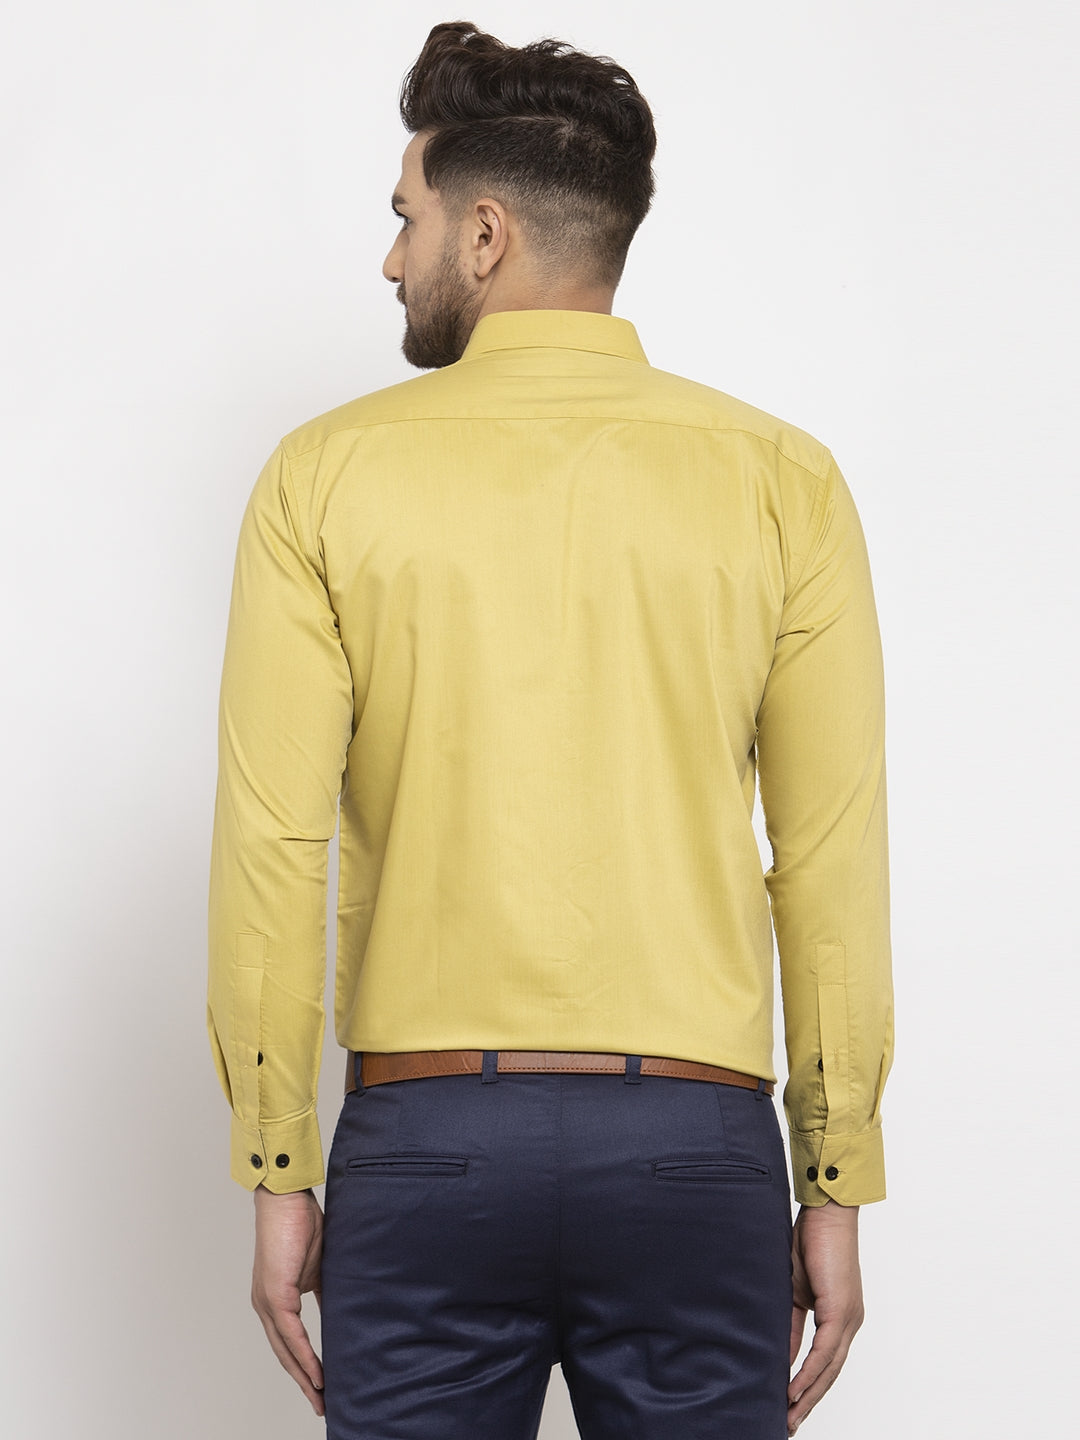 Men's  Lime Yellow Formal Shirt with black detailing ( SF 411Lime ) - Jainish